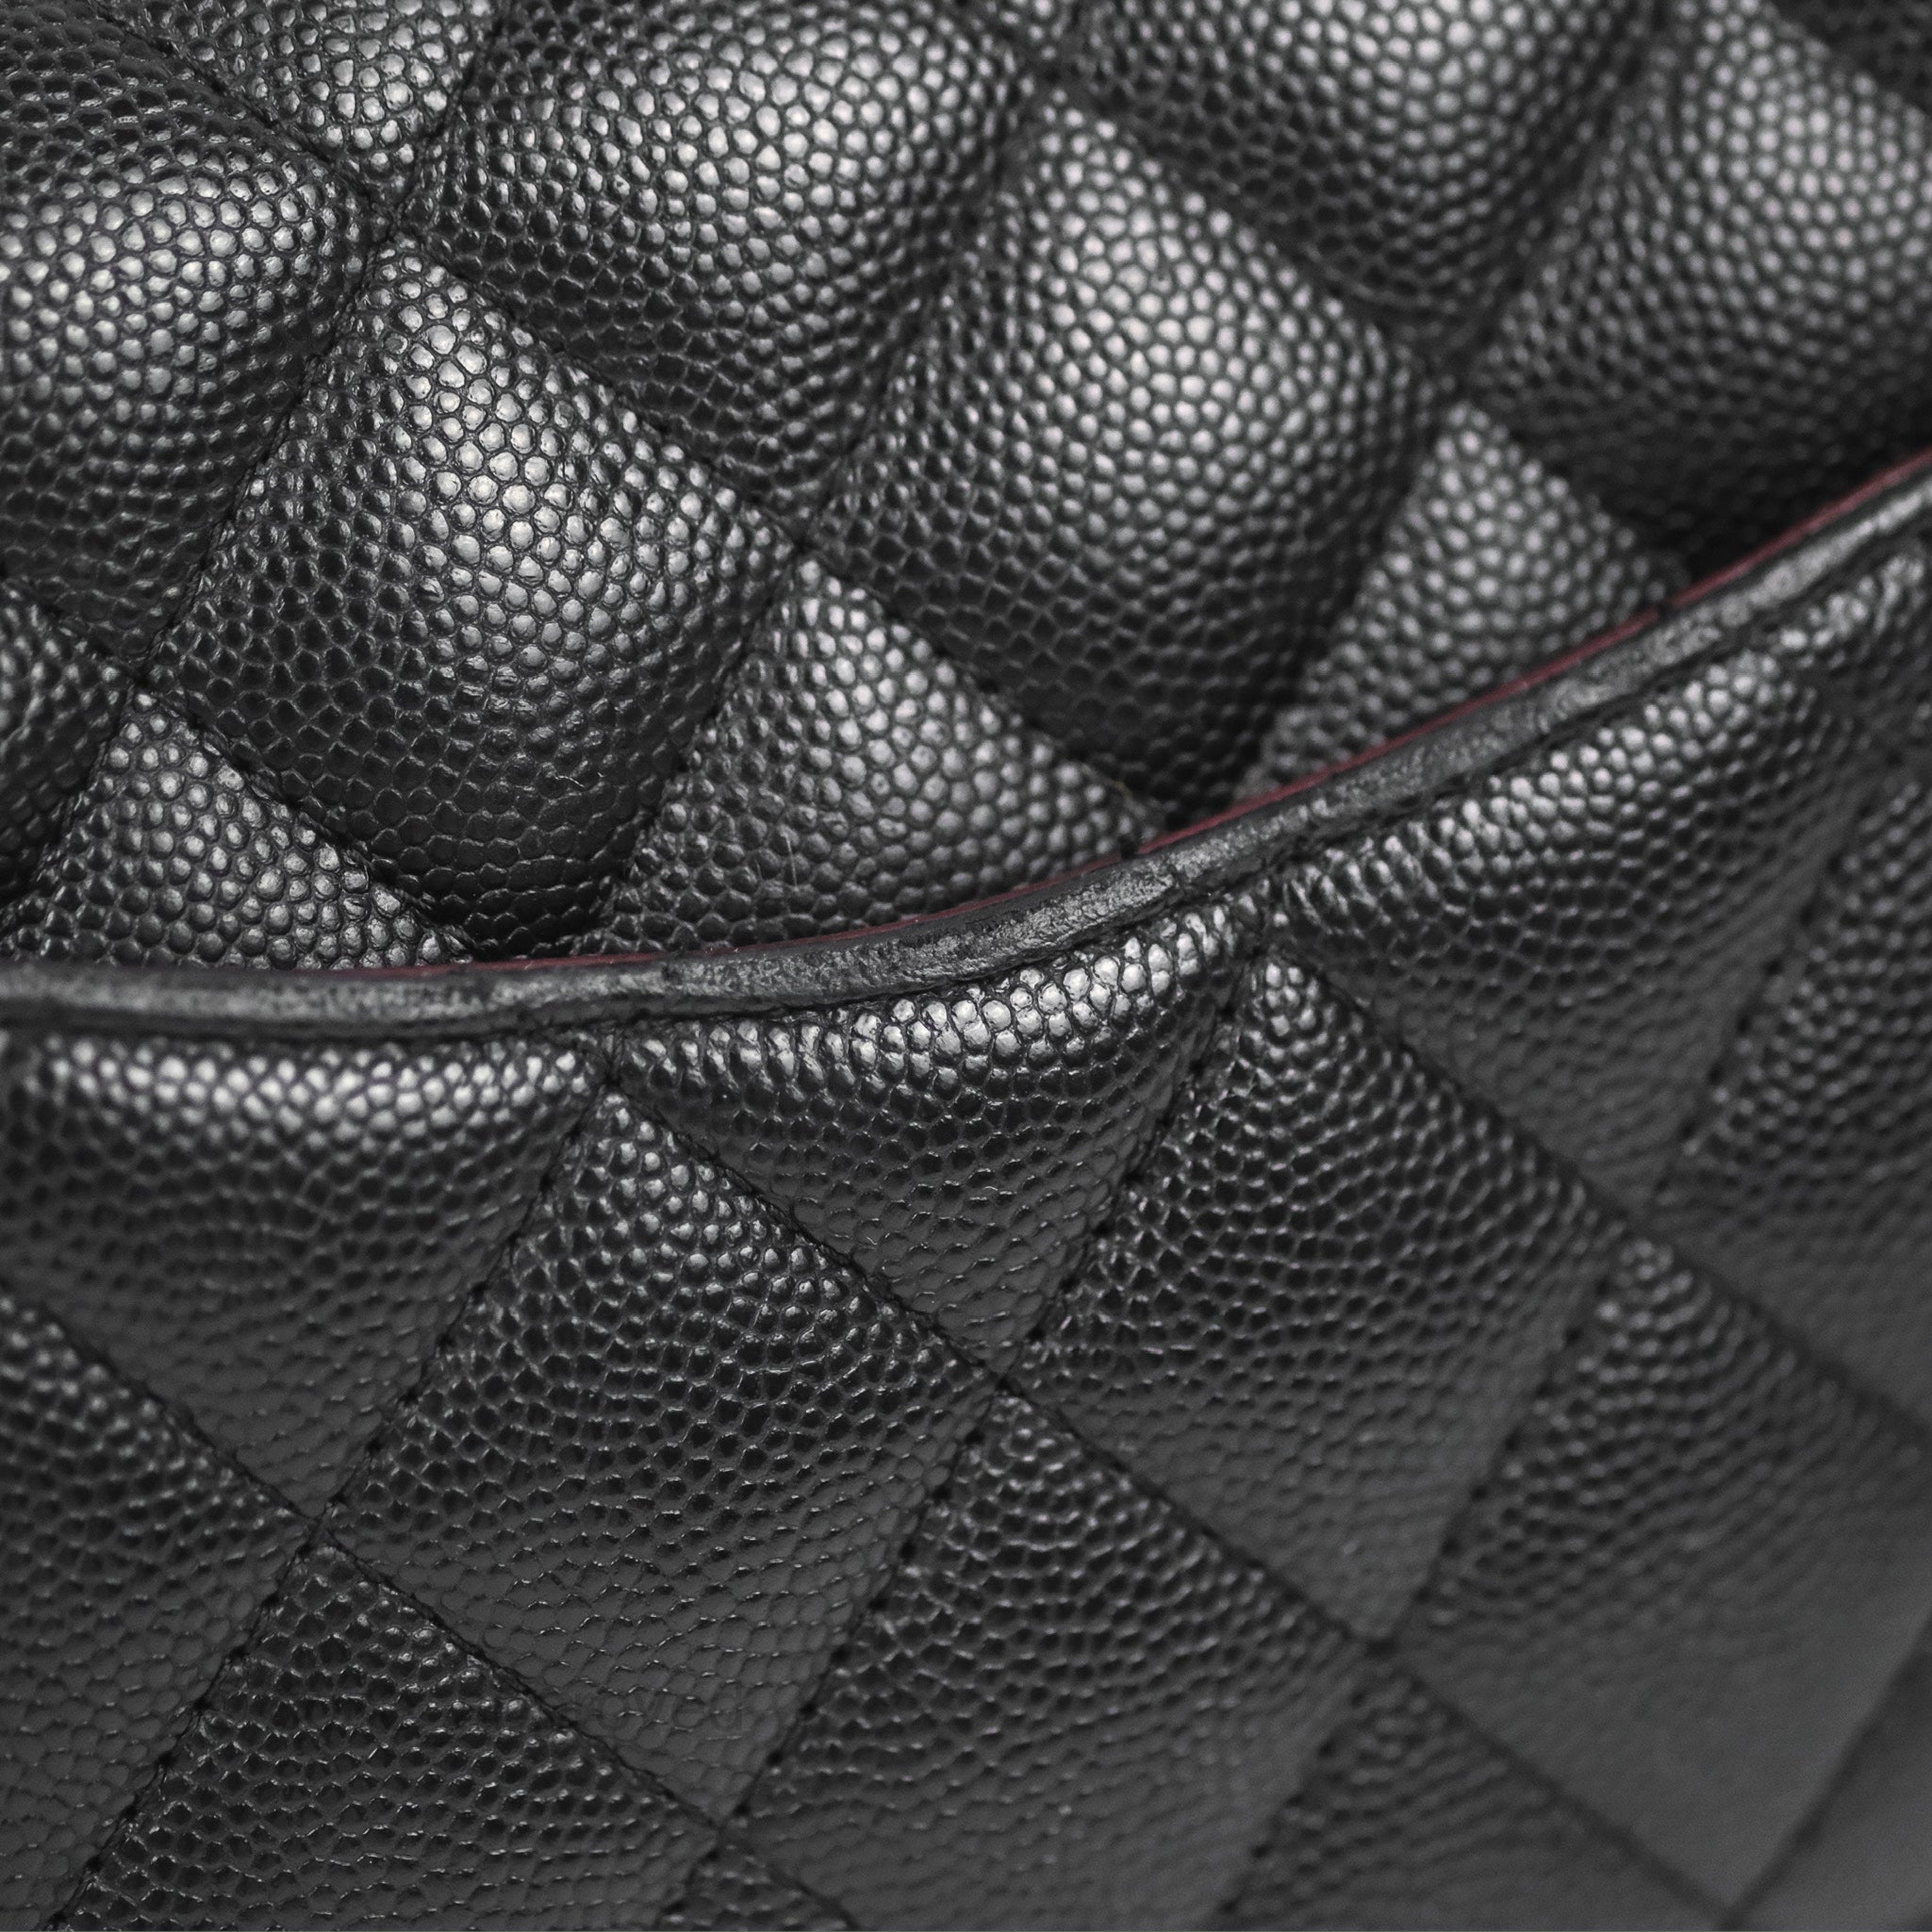 Chanel Quilted Mini O Case Black Caviar Silver Hardware – Coco Approved  Studio